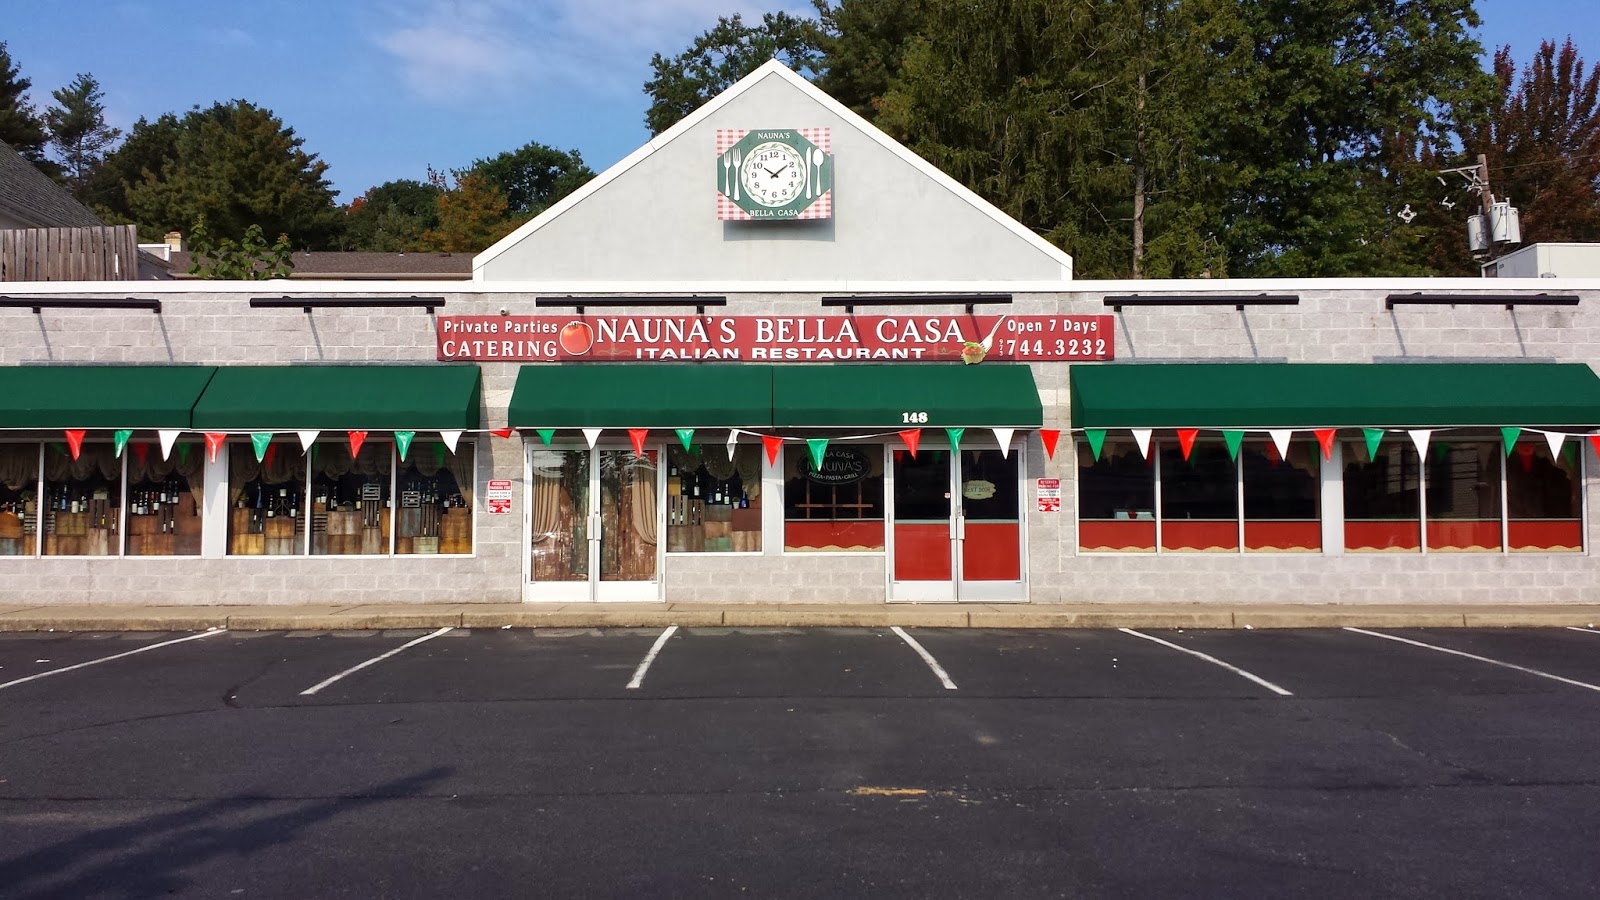 Photo of Nauna's Bella Casa Ristorante in Montclair City, New Jersey, United States - 1 Picture of Restaurant, Food, Point of interest, Establishment, Store